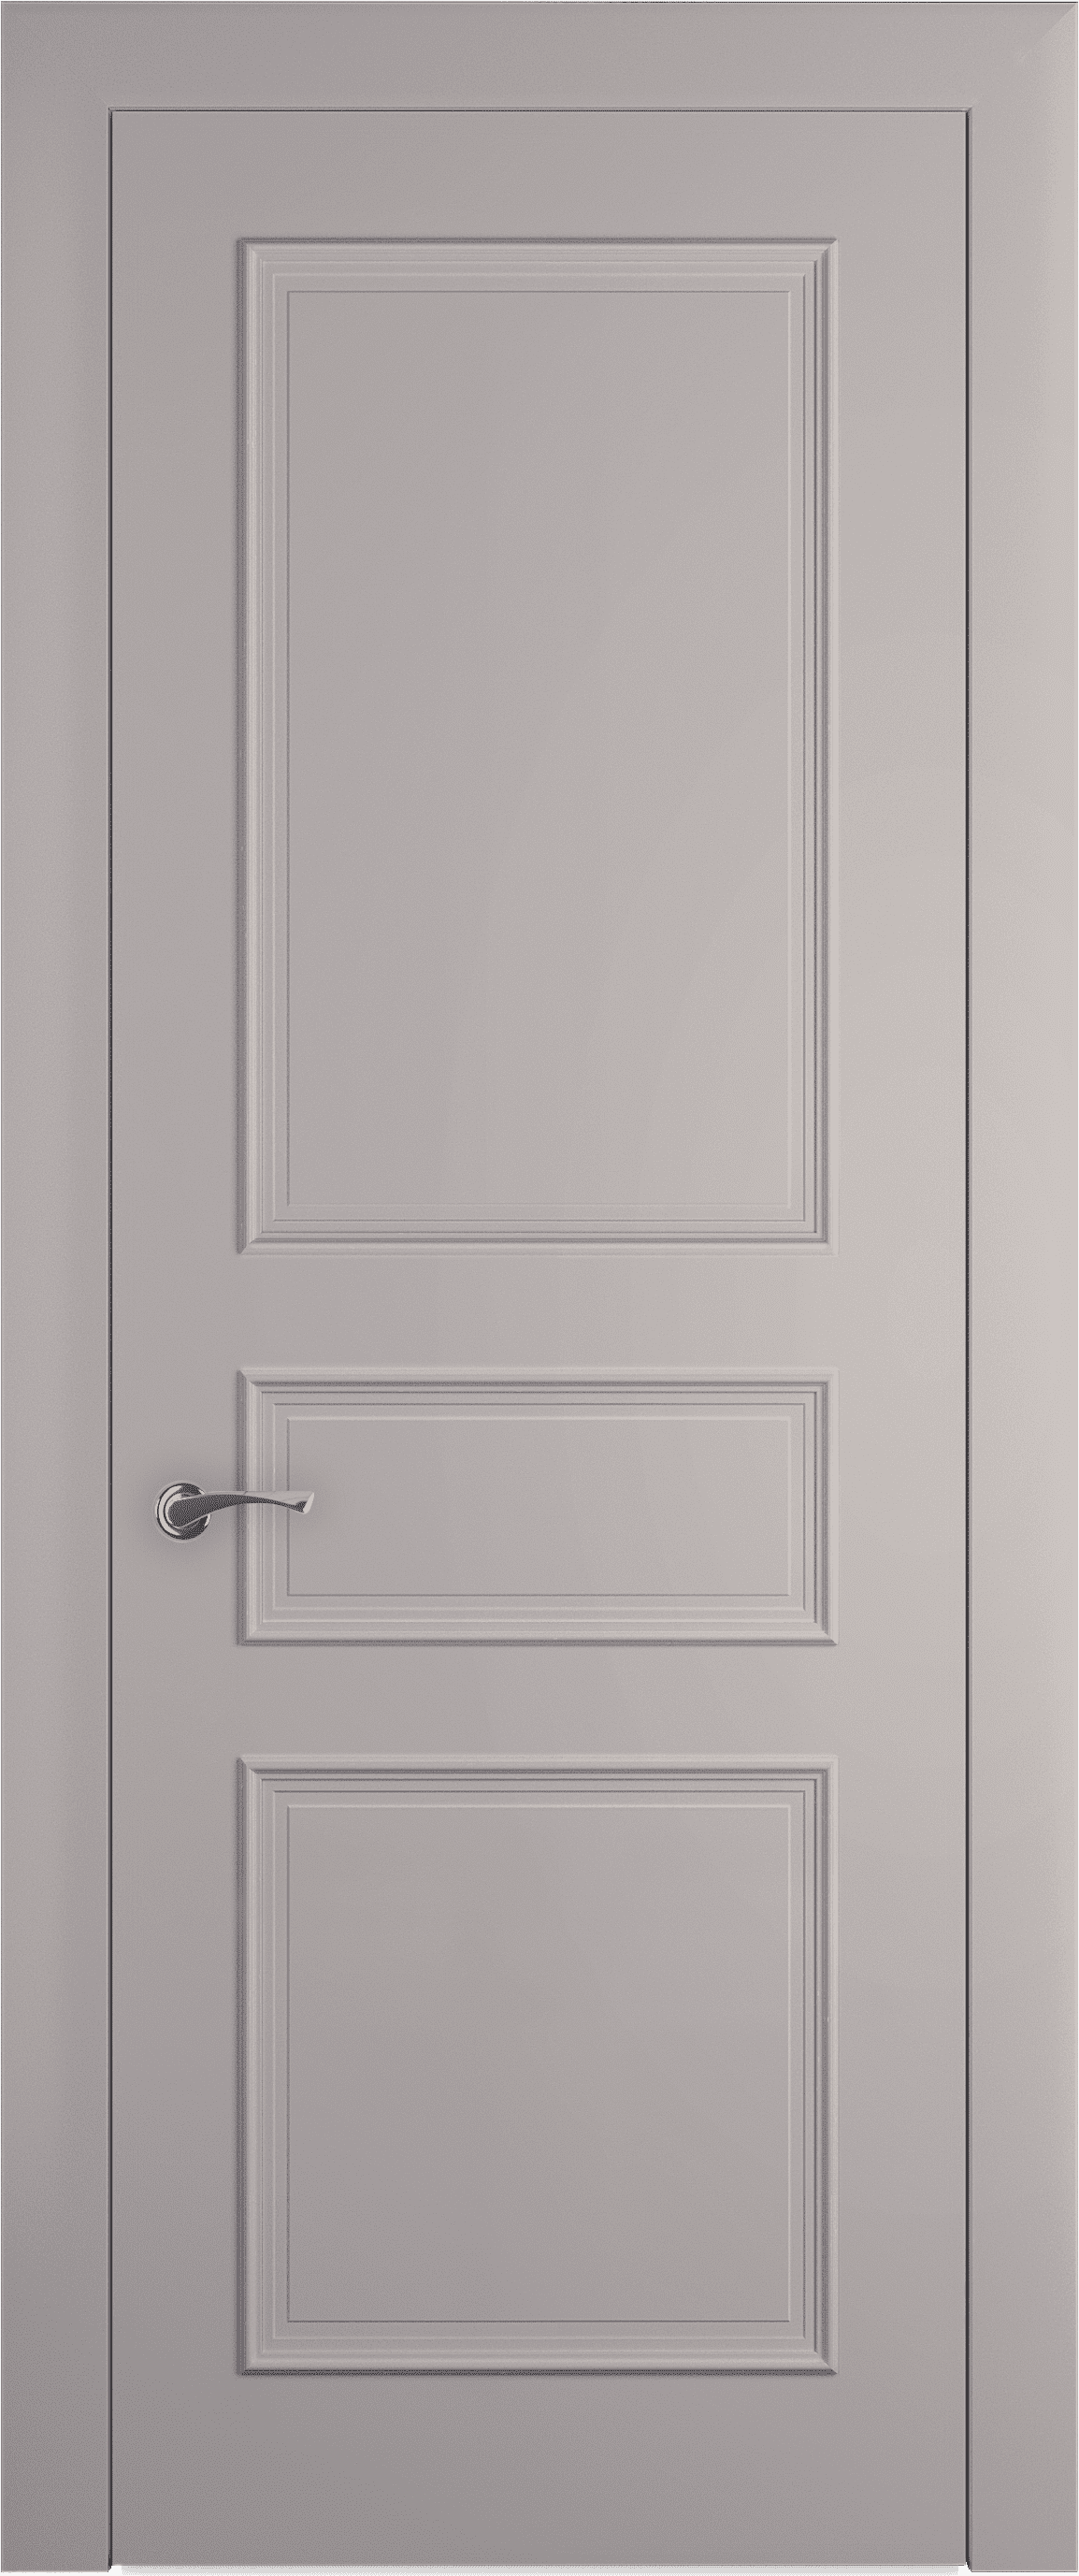 Межкомнатная дверь Турин багет 9